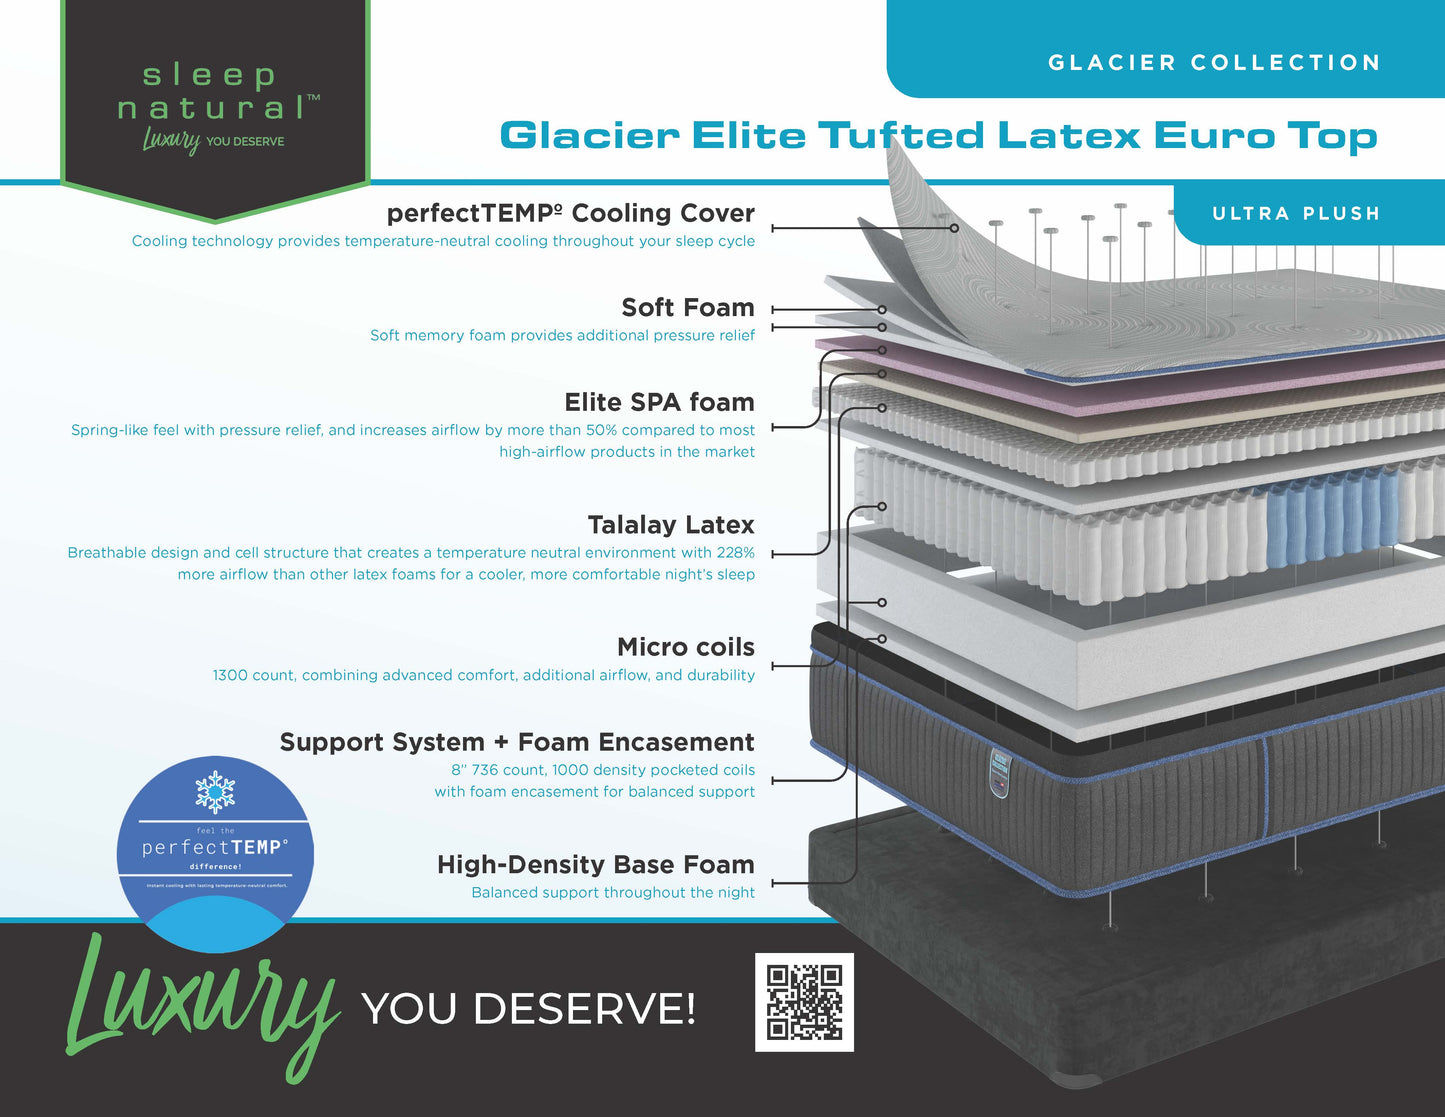 Glacier Elite Tufted Latex - Ultra Plush Mattress 10 Years Warranty